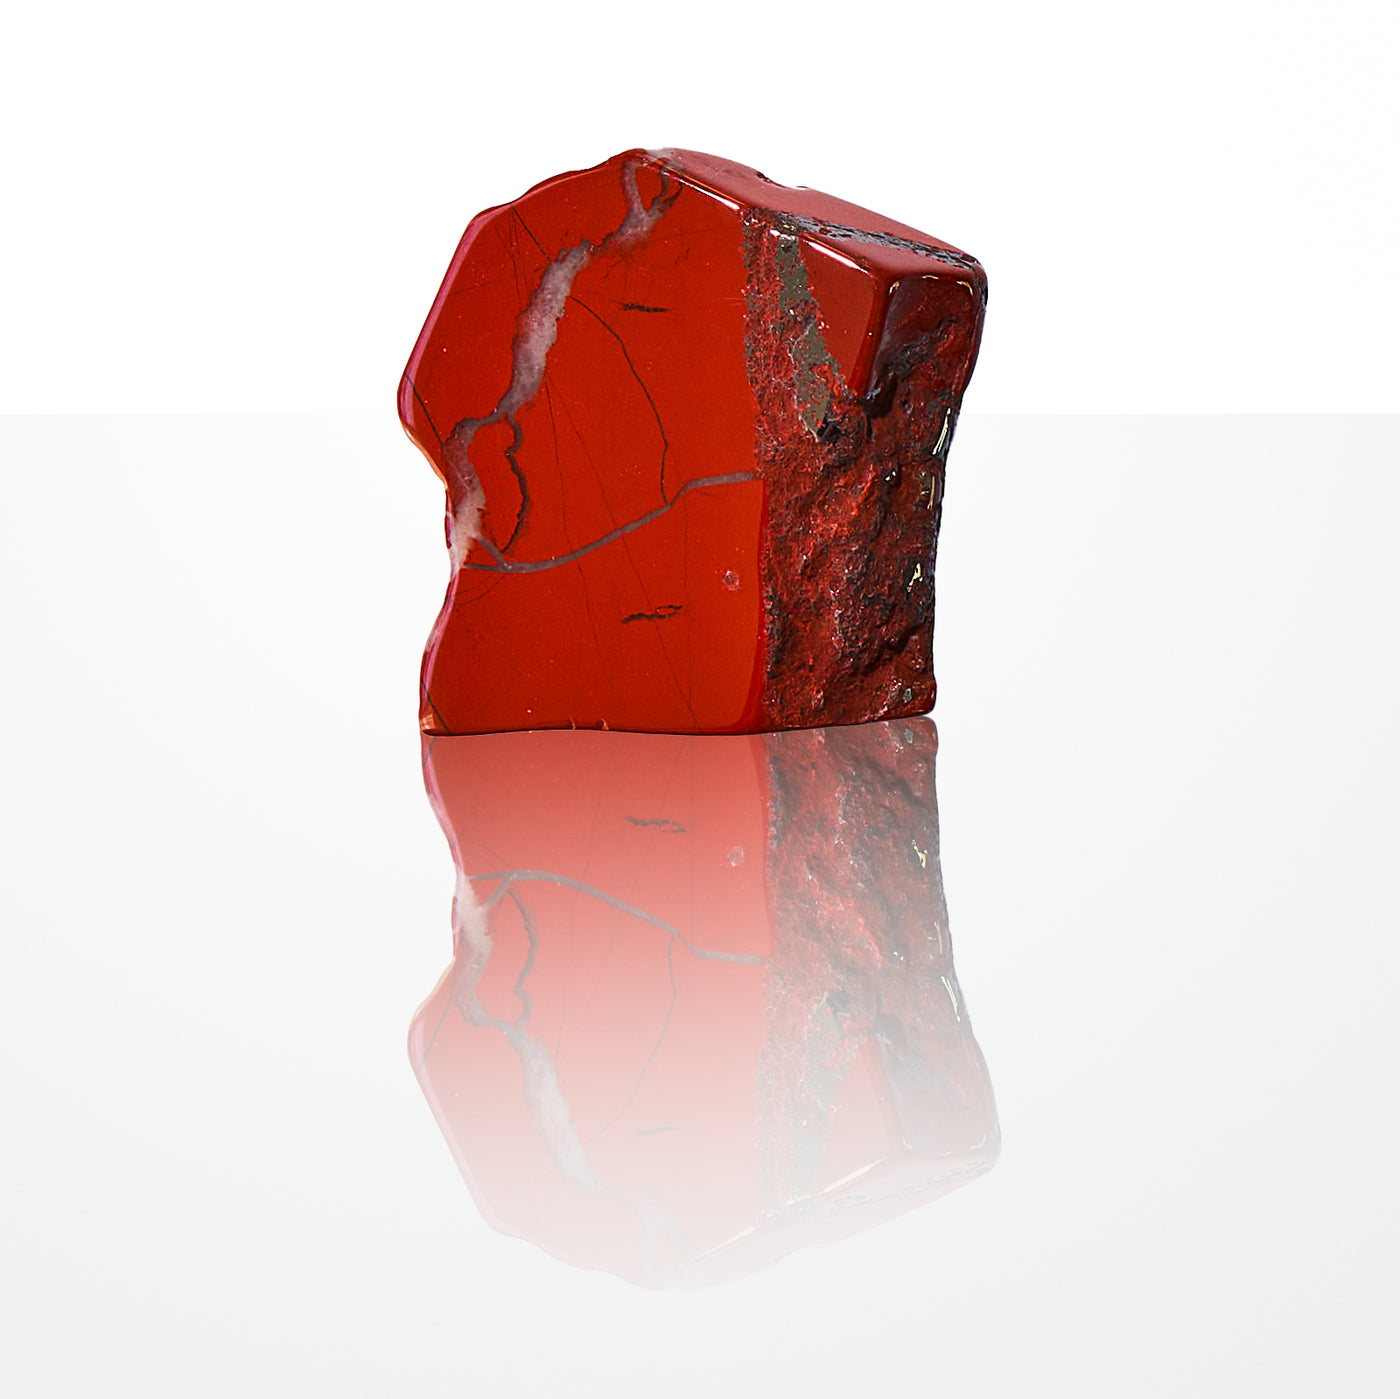 Red Jasper Crystal